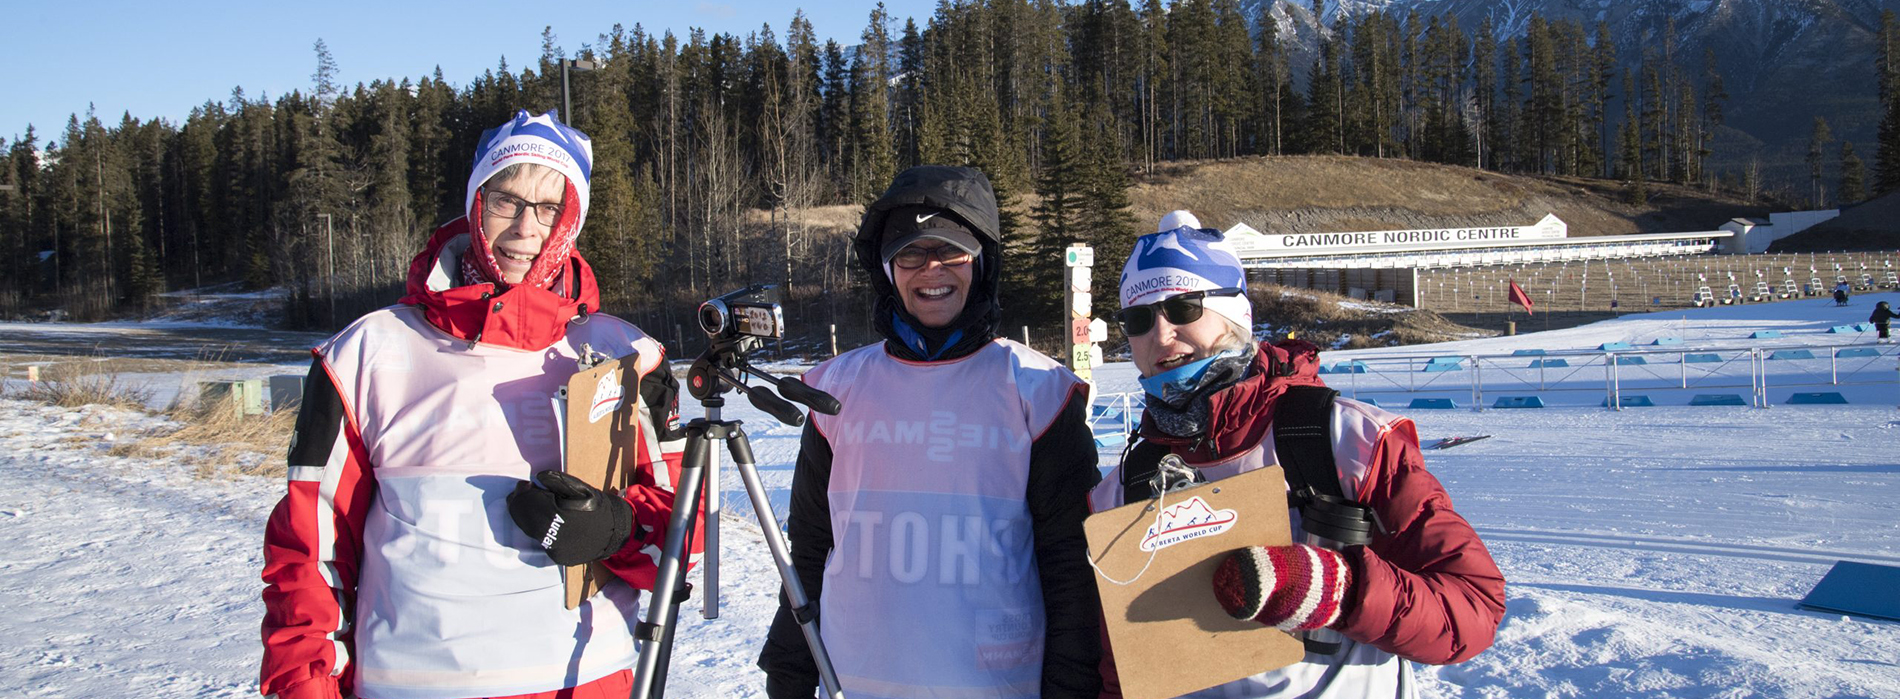 Canmore Alberta Canada World Para Nordic Skiing World Cup